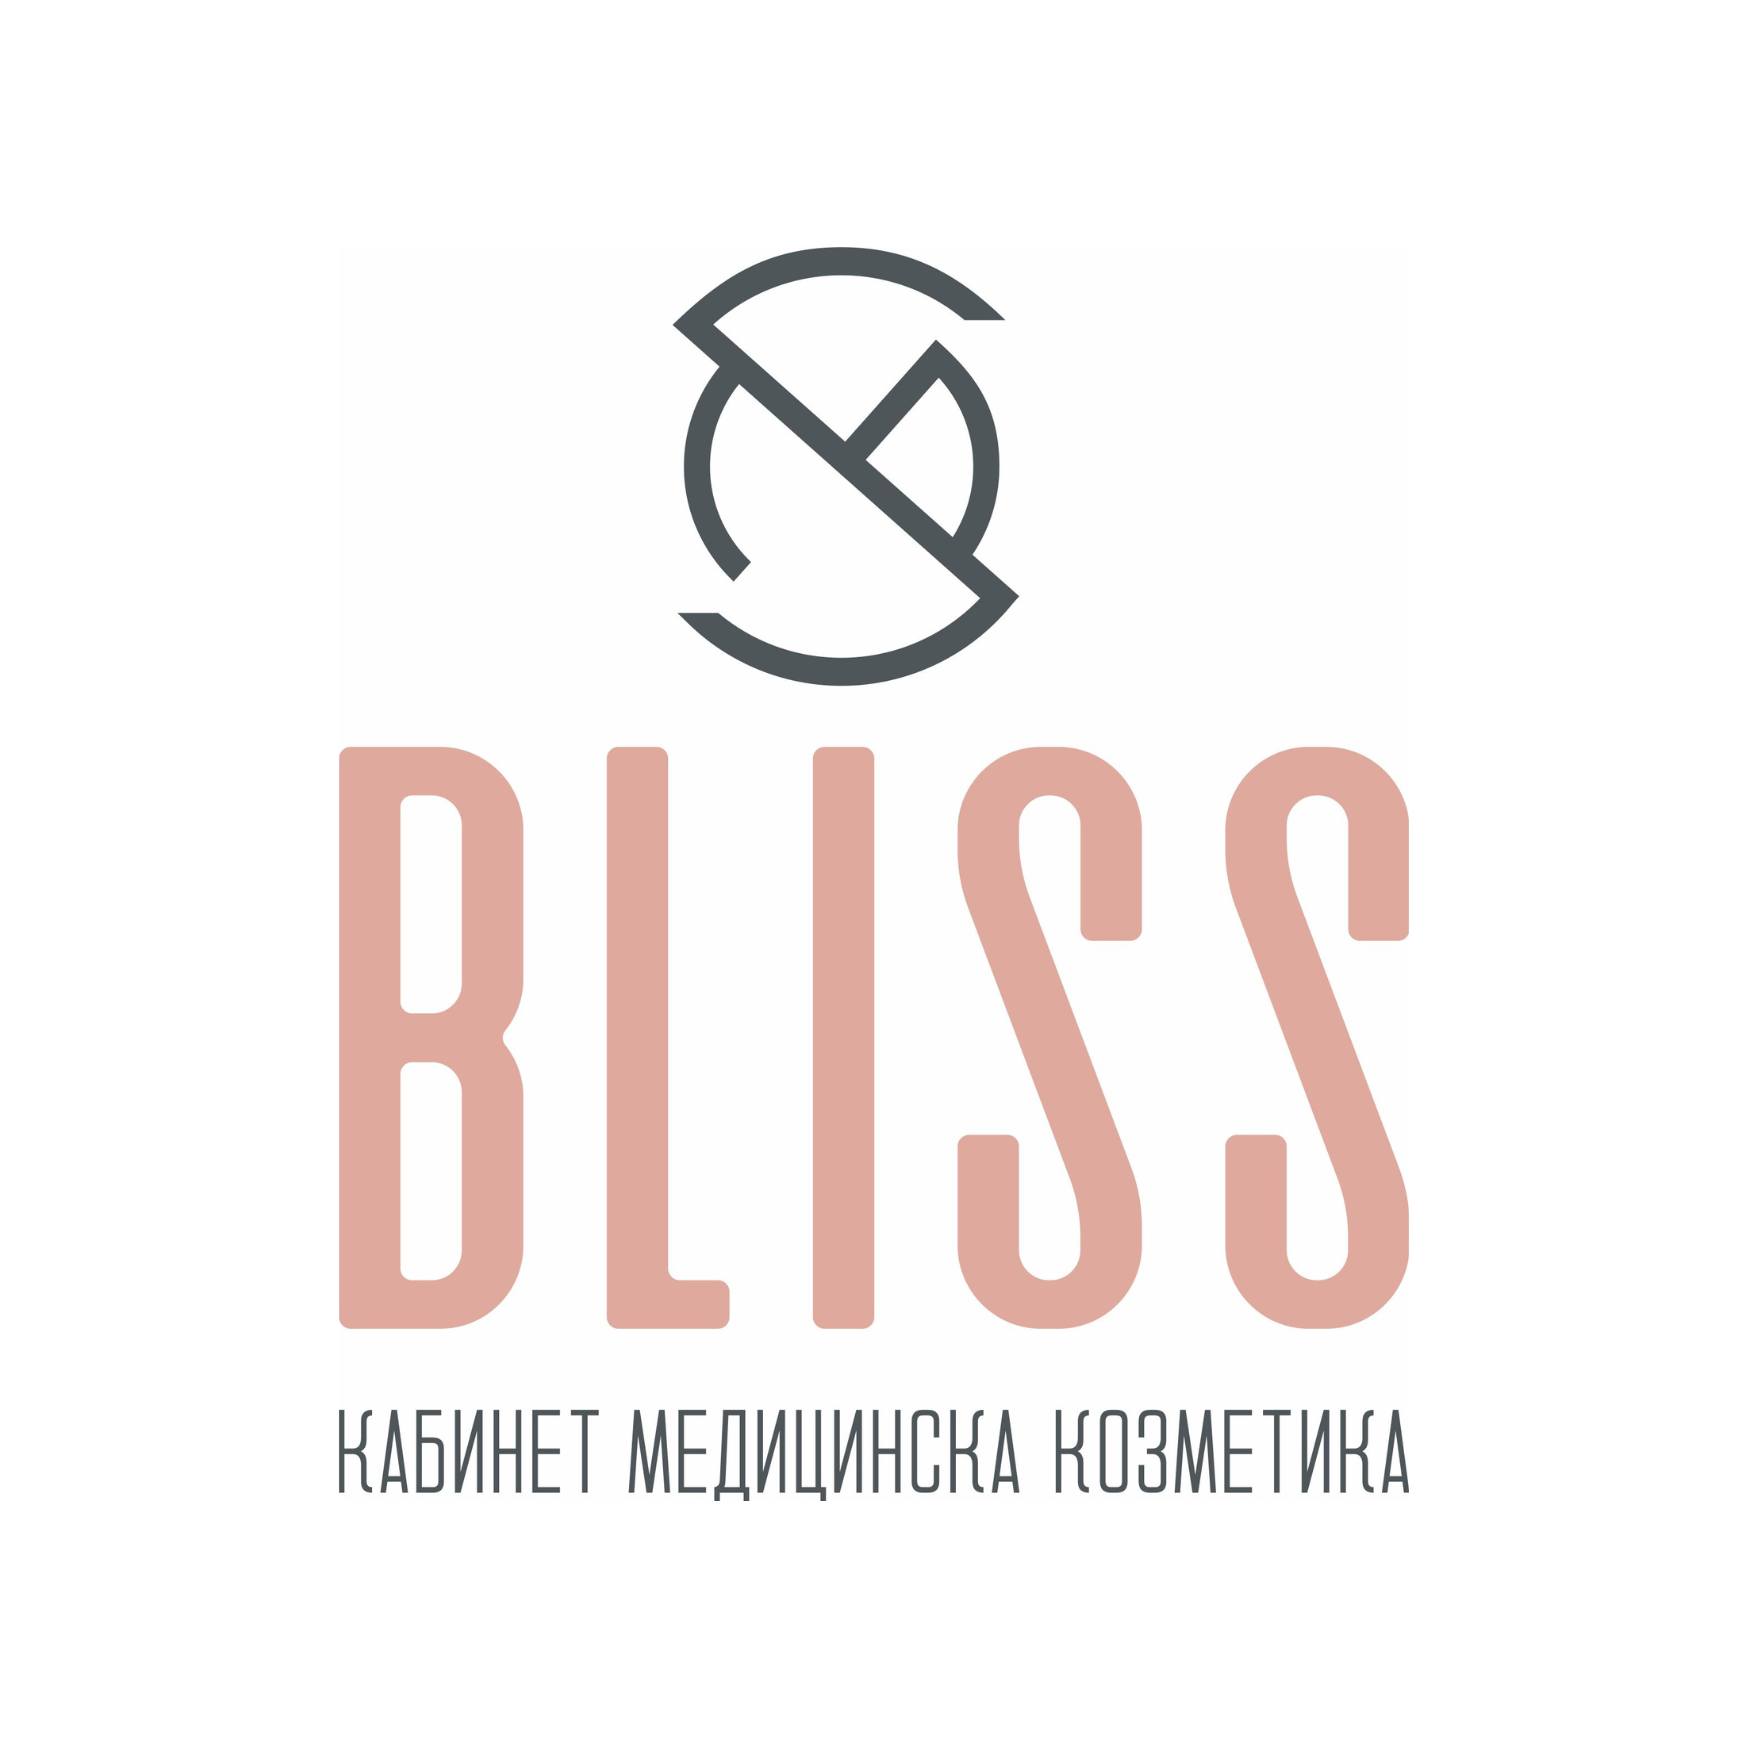 Bliss - кабинет медицинска козметика София